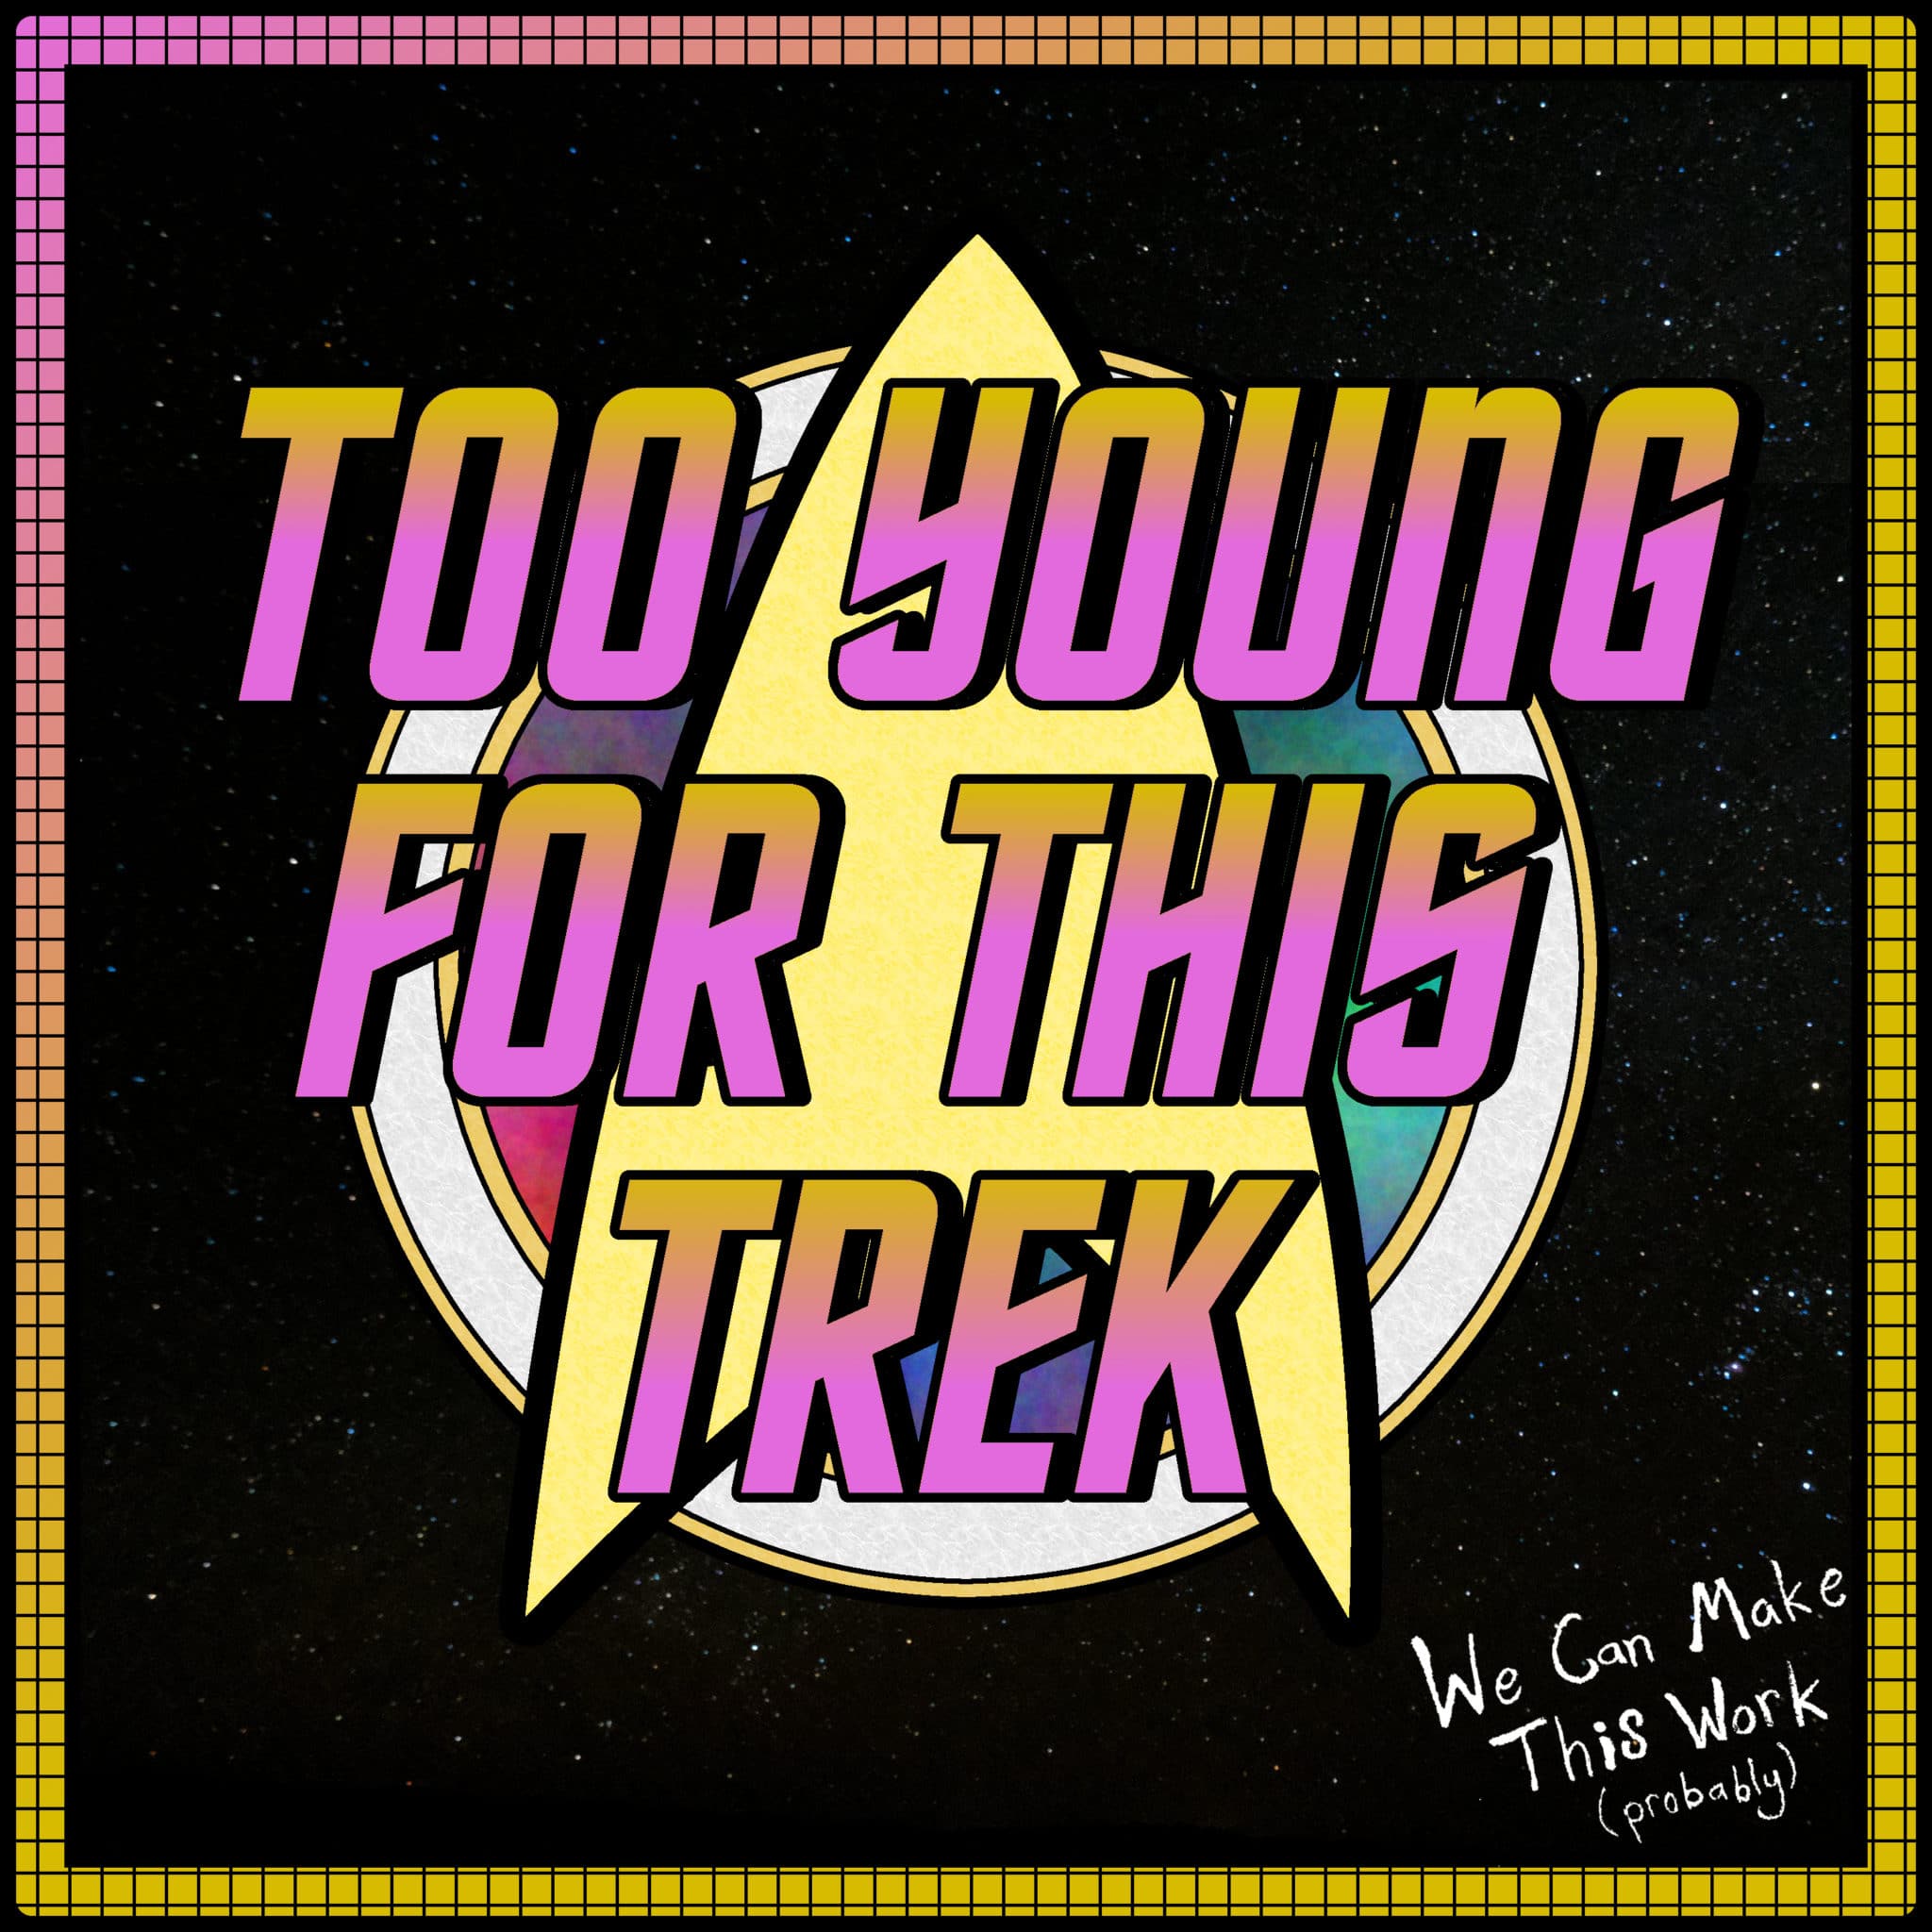 Star Trek: Discovery S4E11 - Rosetta Stone